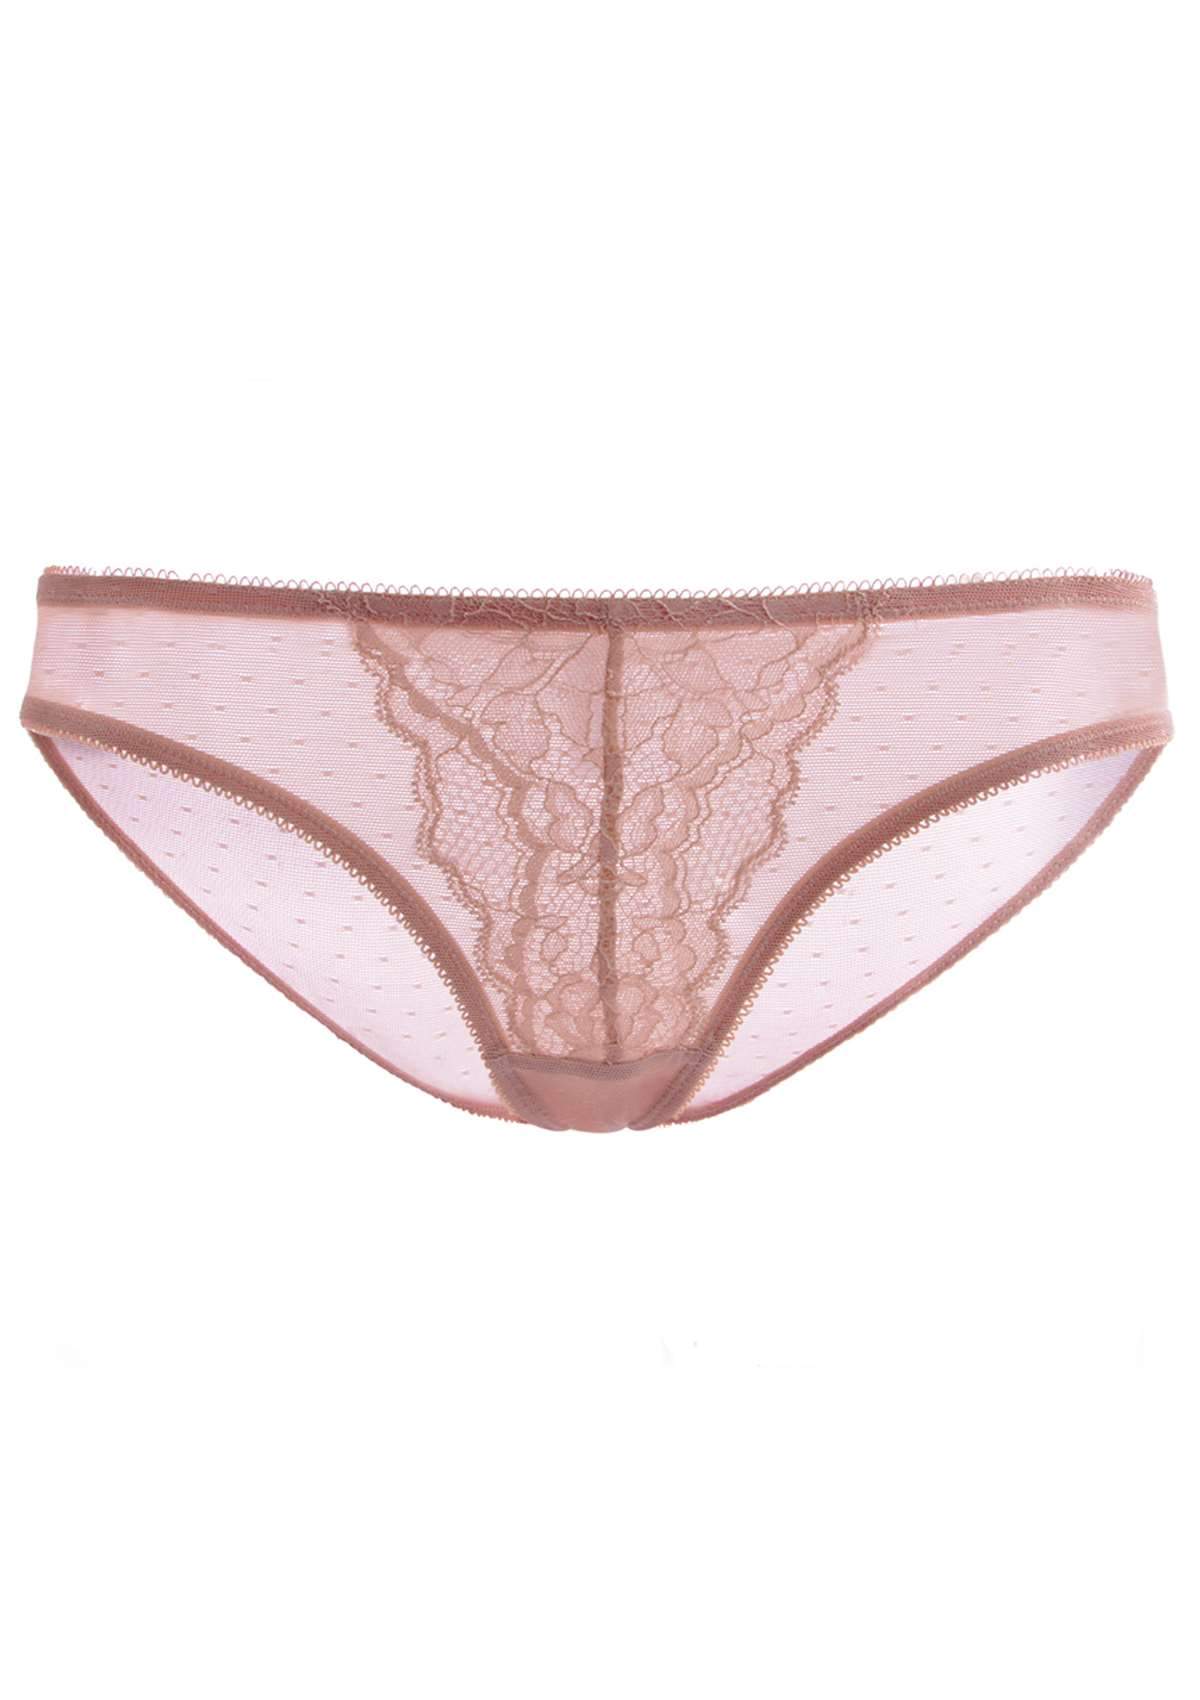 HSIA Enchante Sheer Lace Mesh Mid Rise Bikini Underwear - XXXL / Light Coral